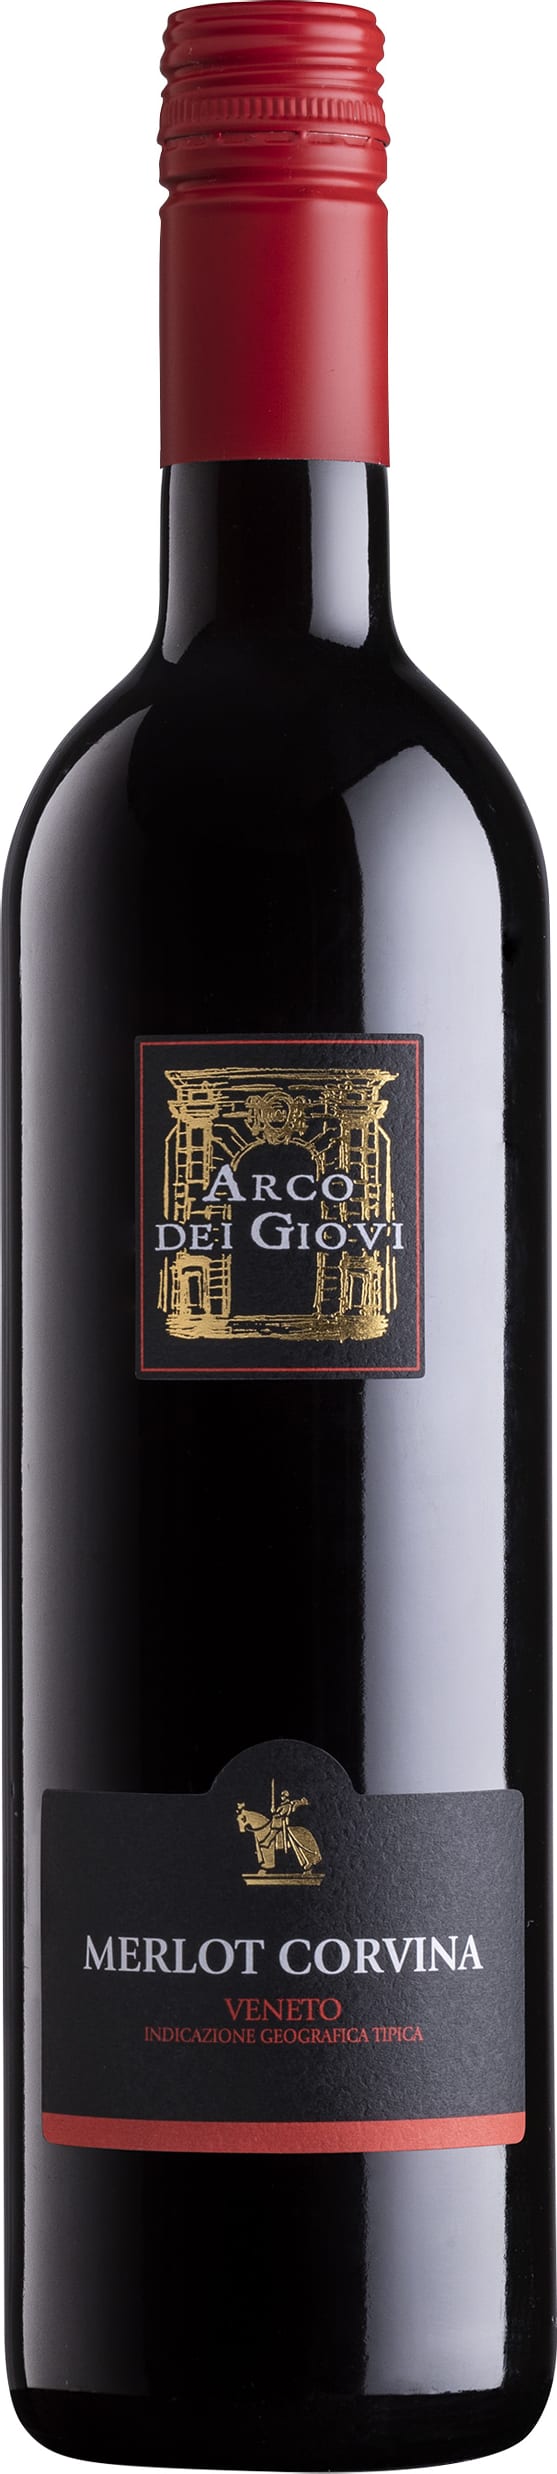 Merlot Corvina IGT 21 Arco dei Giovi 75cl - Buy Arco dei Giovi Wines from GREAT WINES DIRECT wine shop